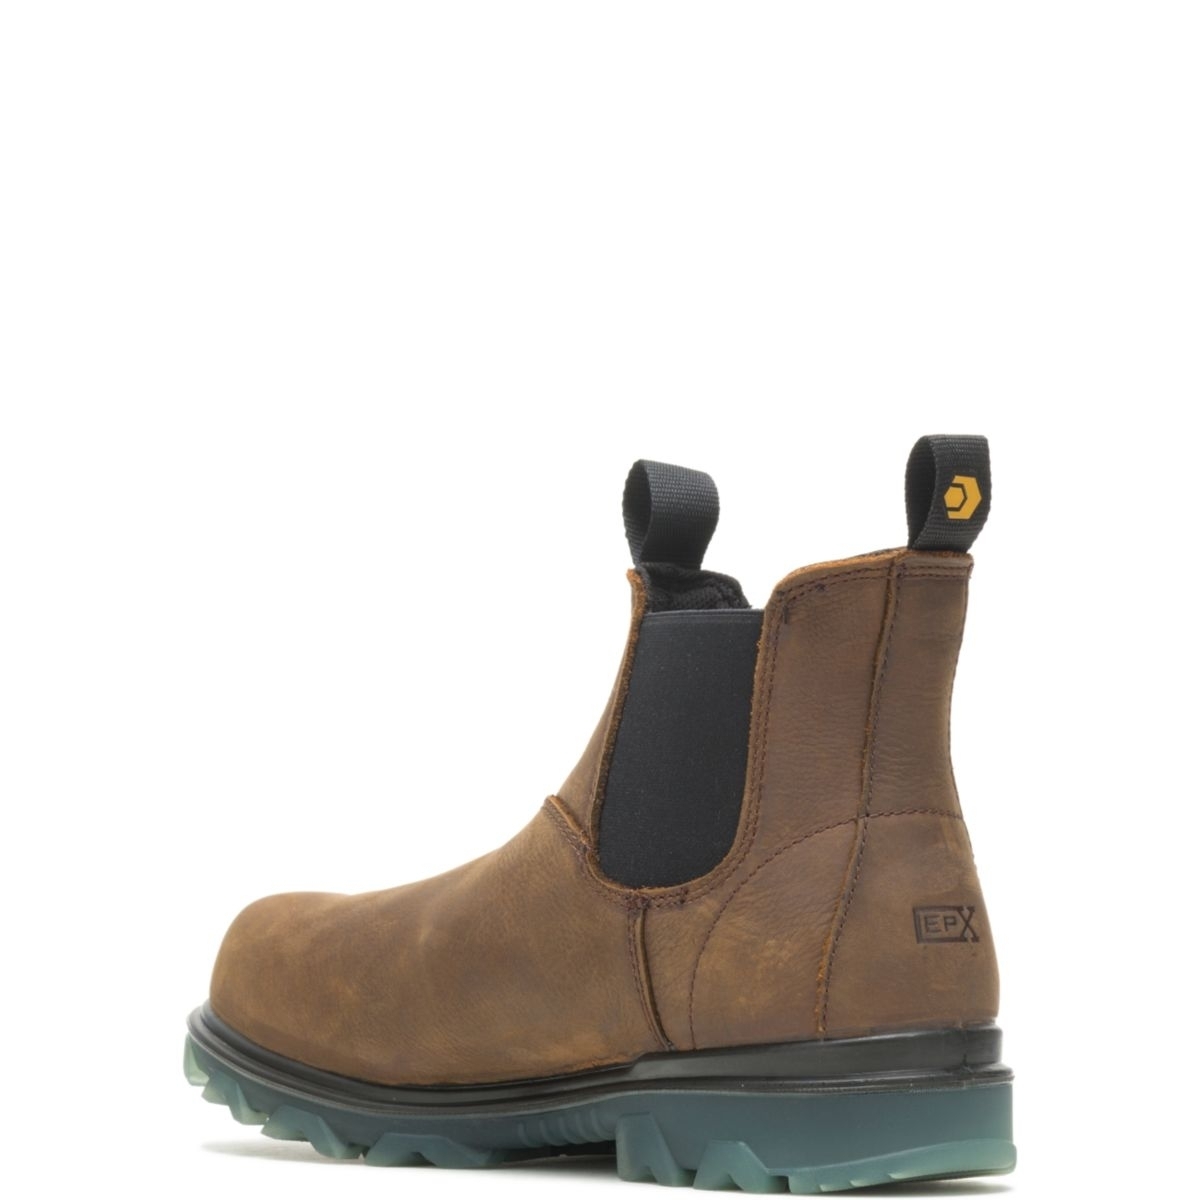 WOLVERINE Men's I-90 EPXÂ® Waterproof Soft Toe Romeo Pull On Work Boot Brown - W10790 - SUDAN BROWN, 8.5 X-Wide